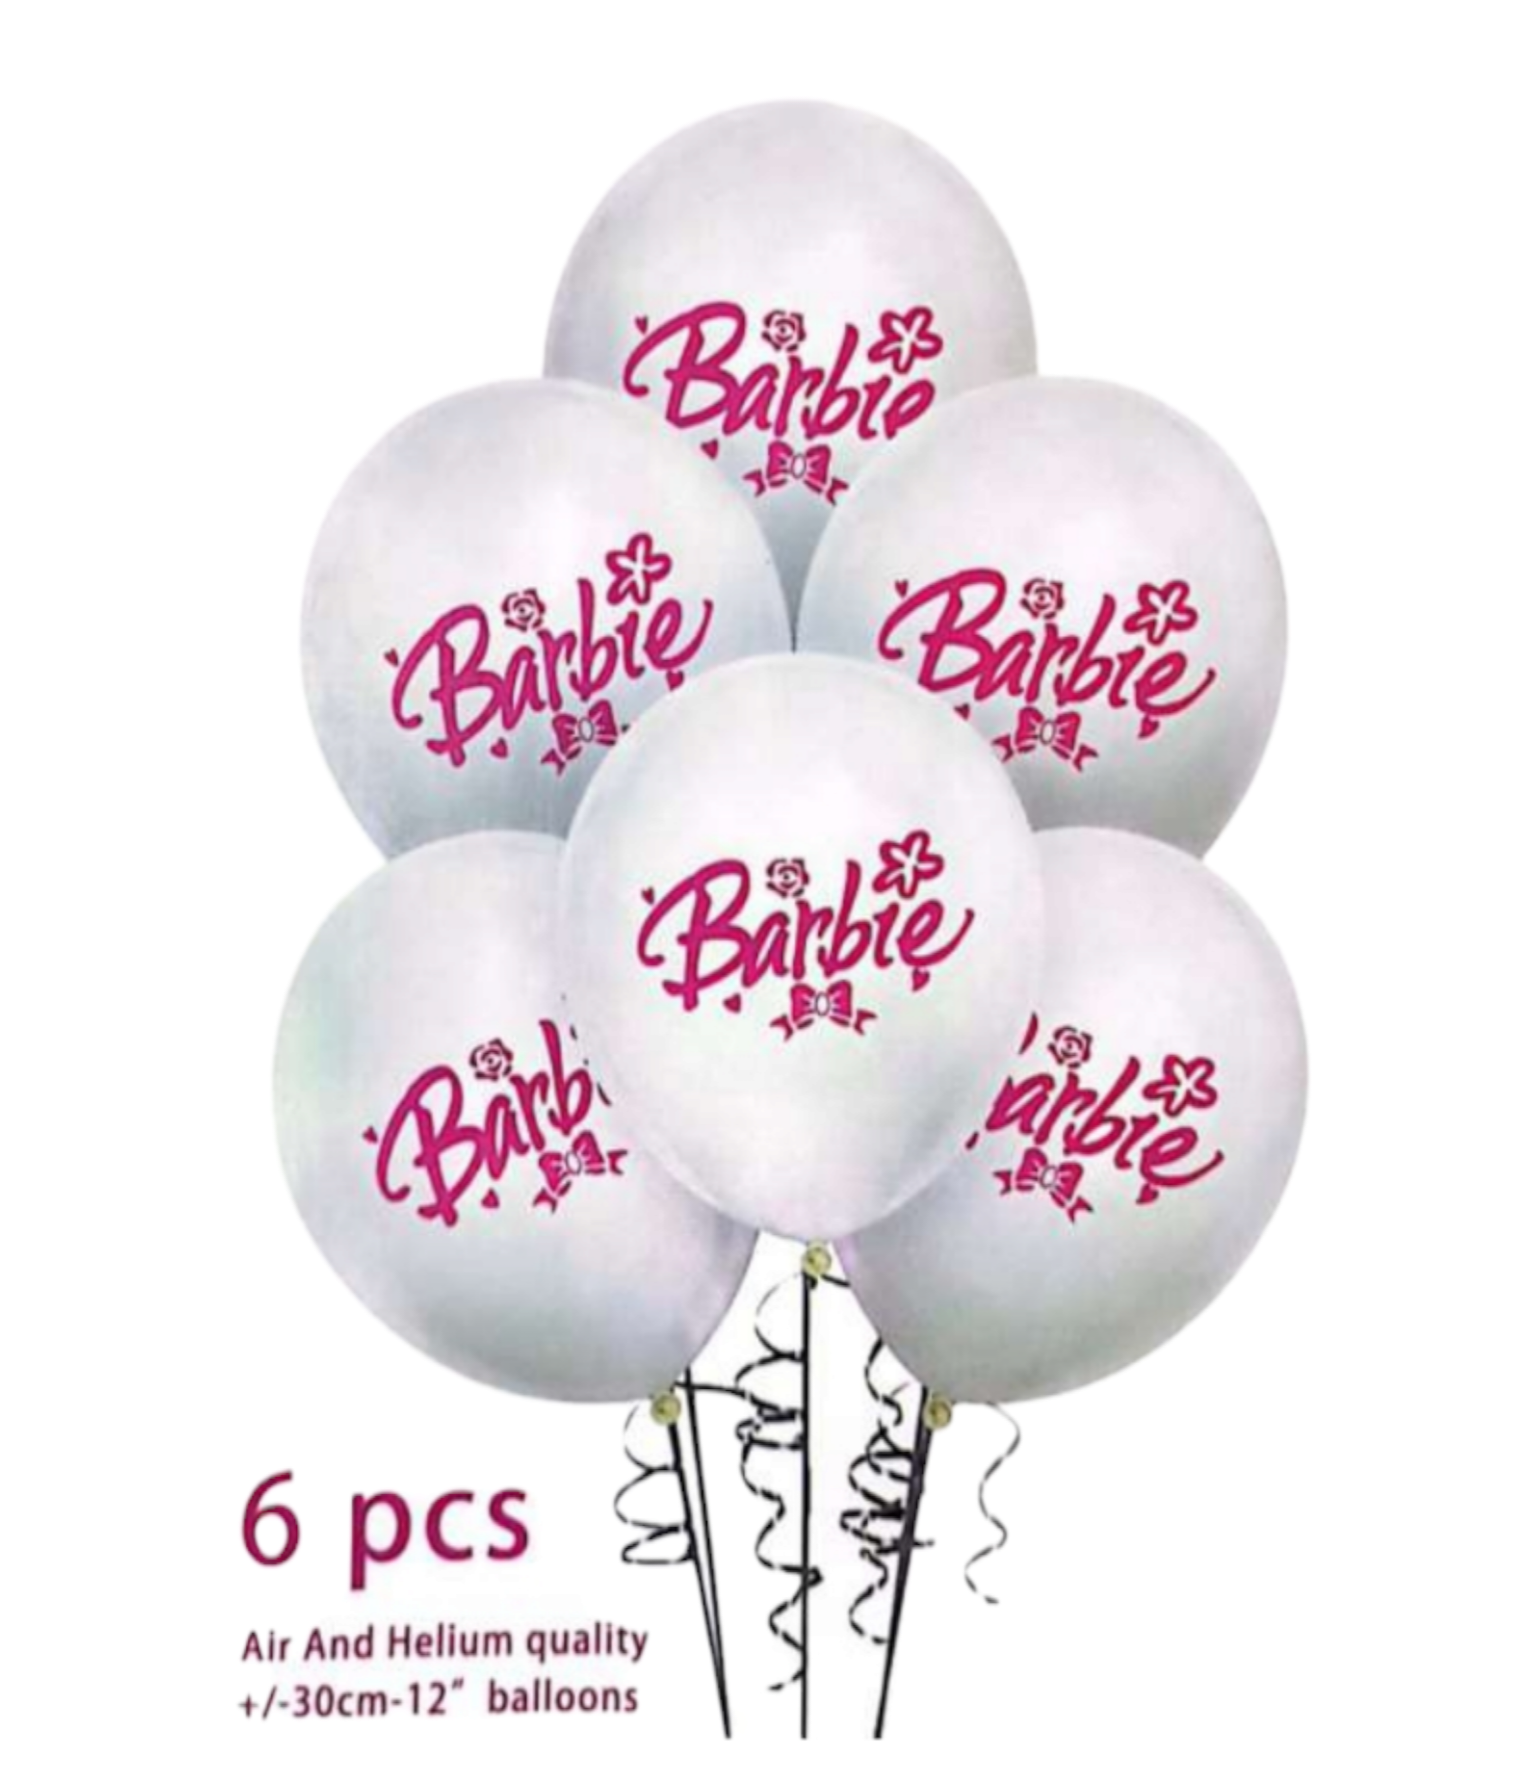 Disney Barbie White Latex Balloons 12inch 6pc Set